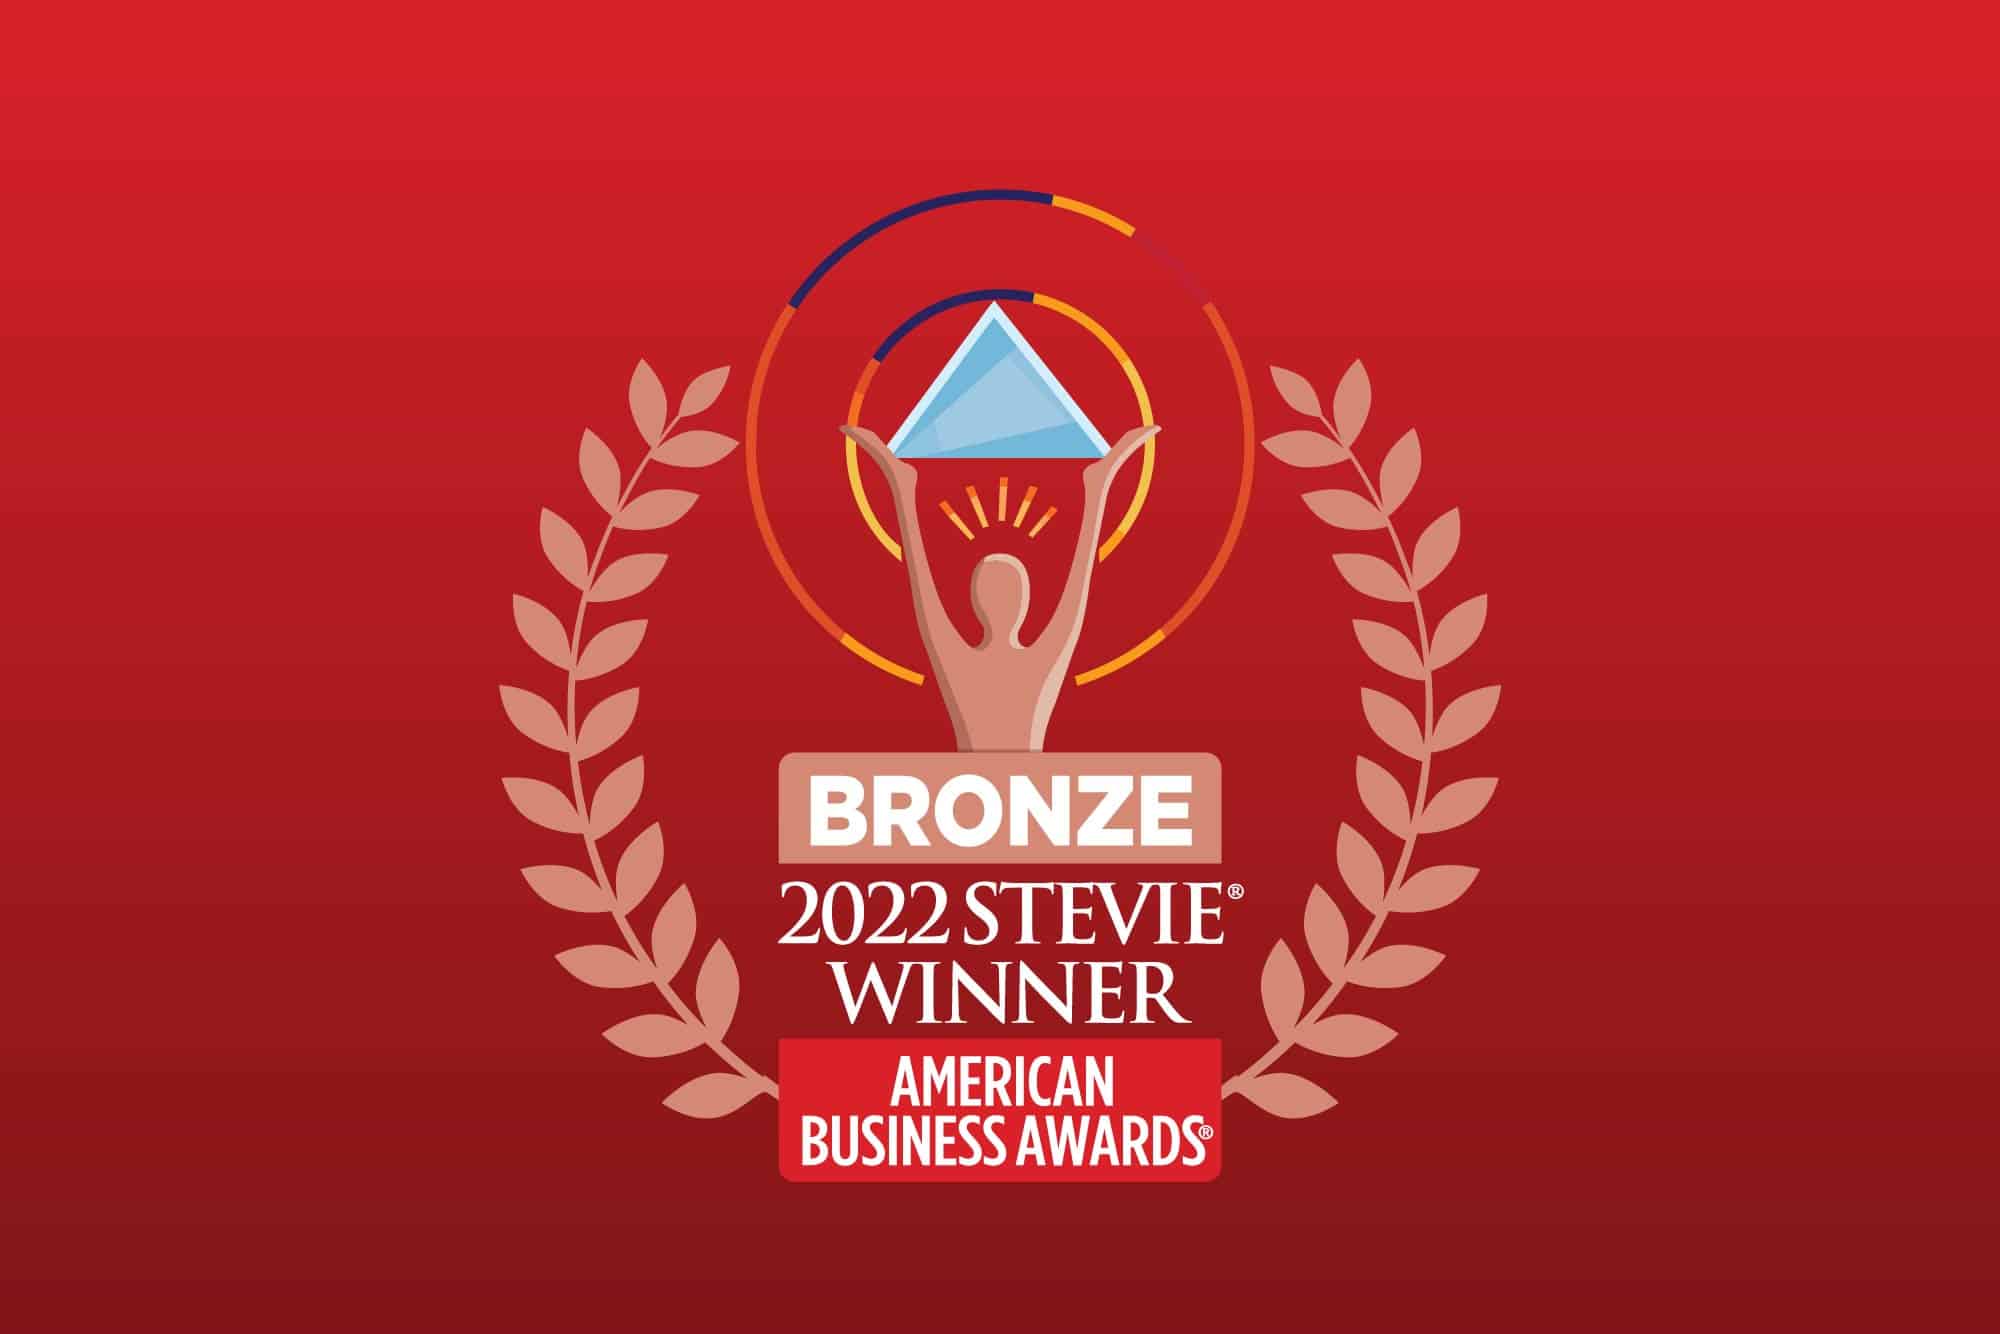 DISRUPTIVE HONORED AS BRONZE STEVIE® AWARD WINNER IN 2022 AMERICAN BUSINESS AWARDS®